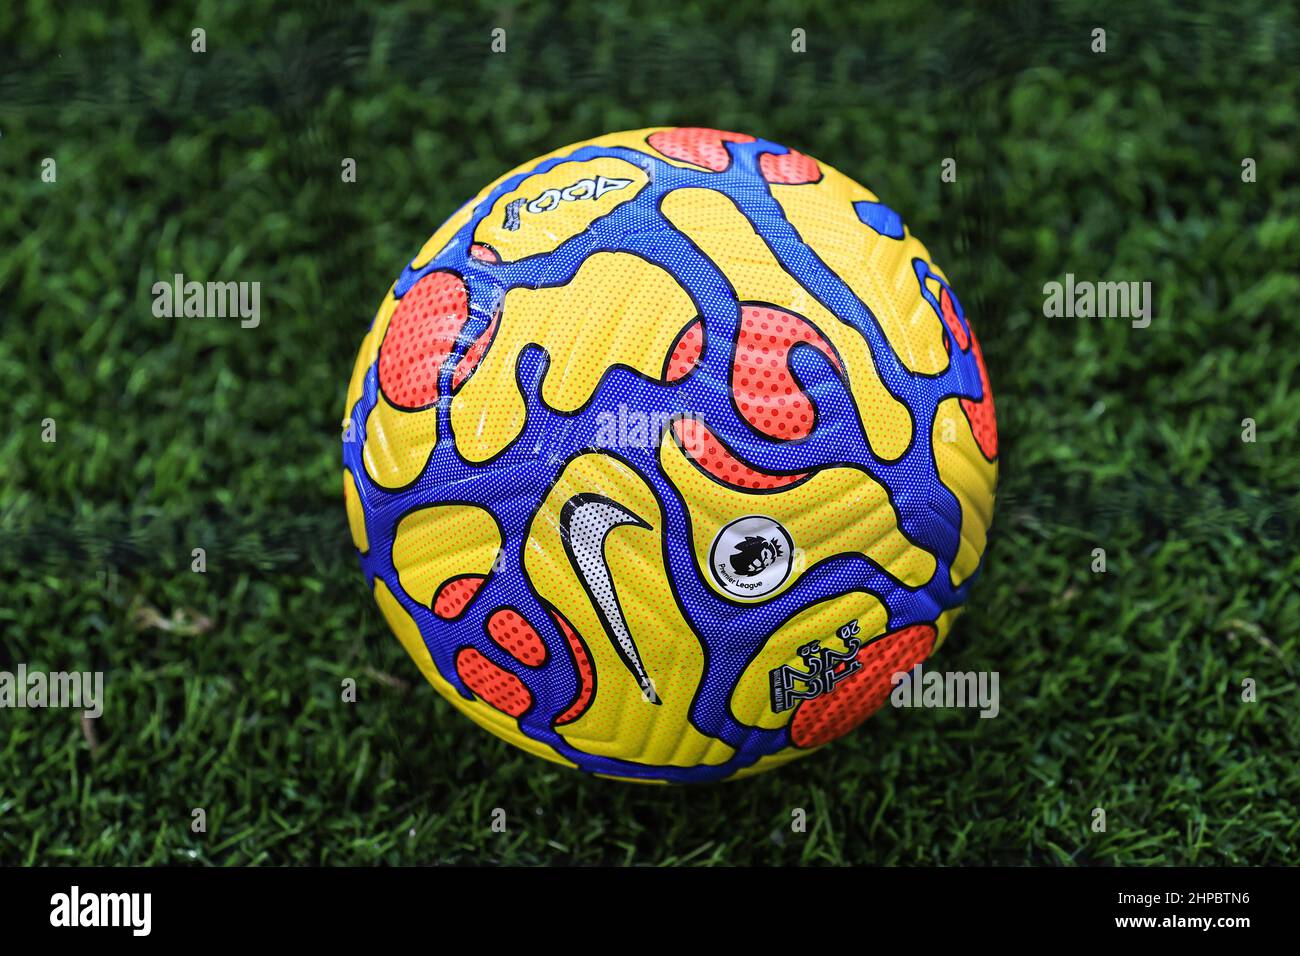 Premier League Nike Flight official match ball Stock Photo